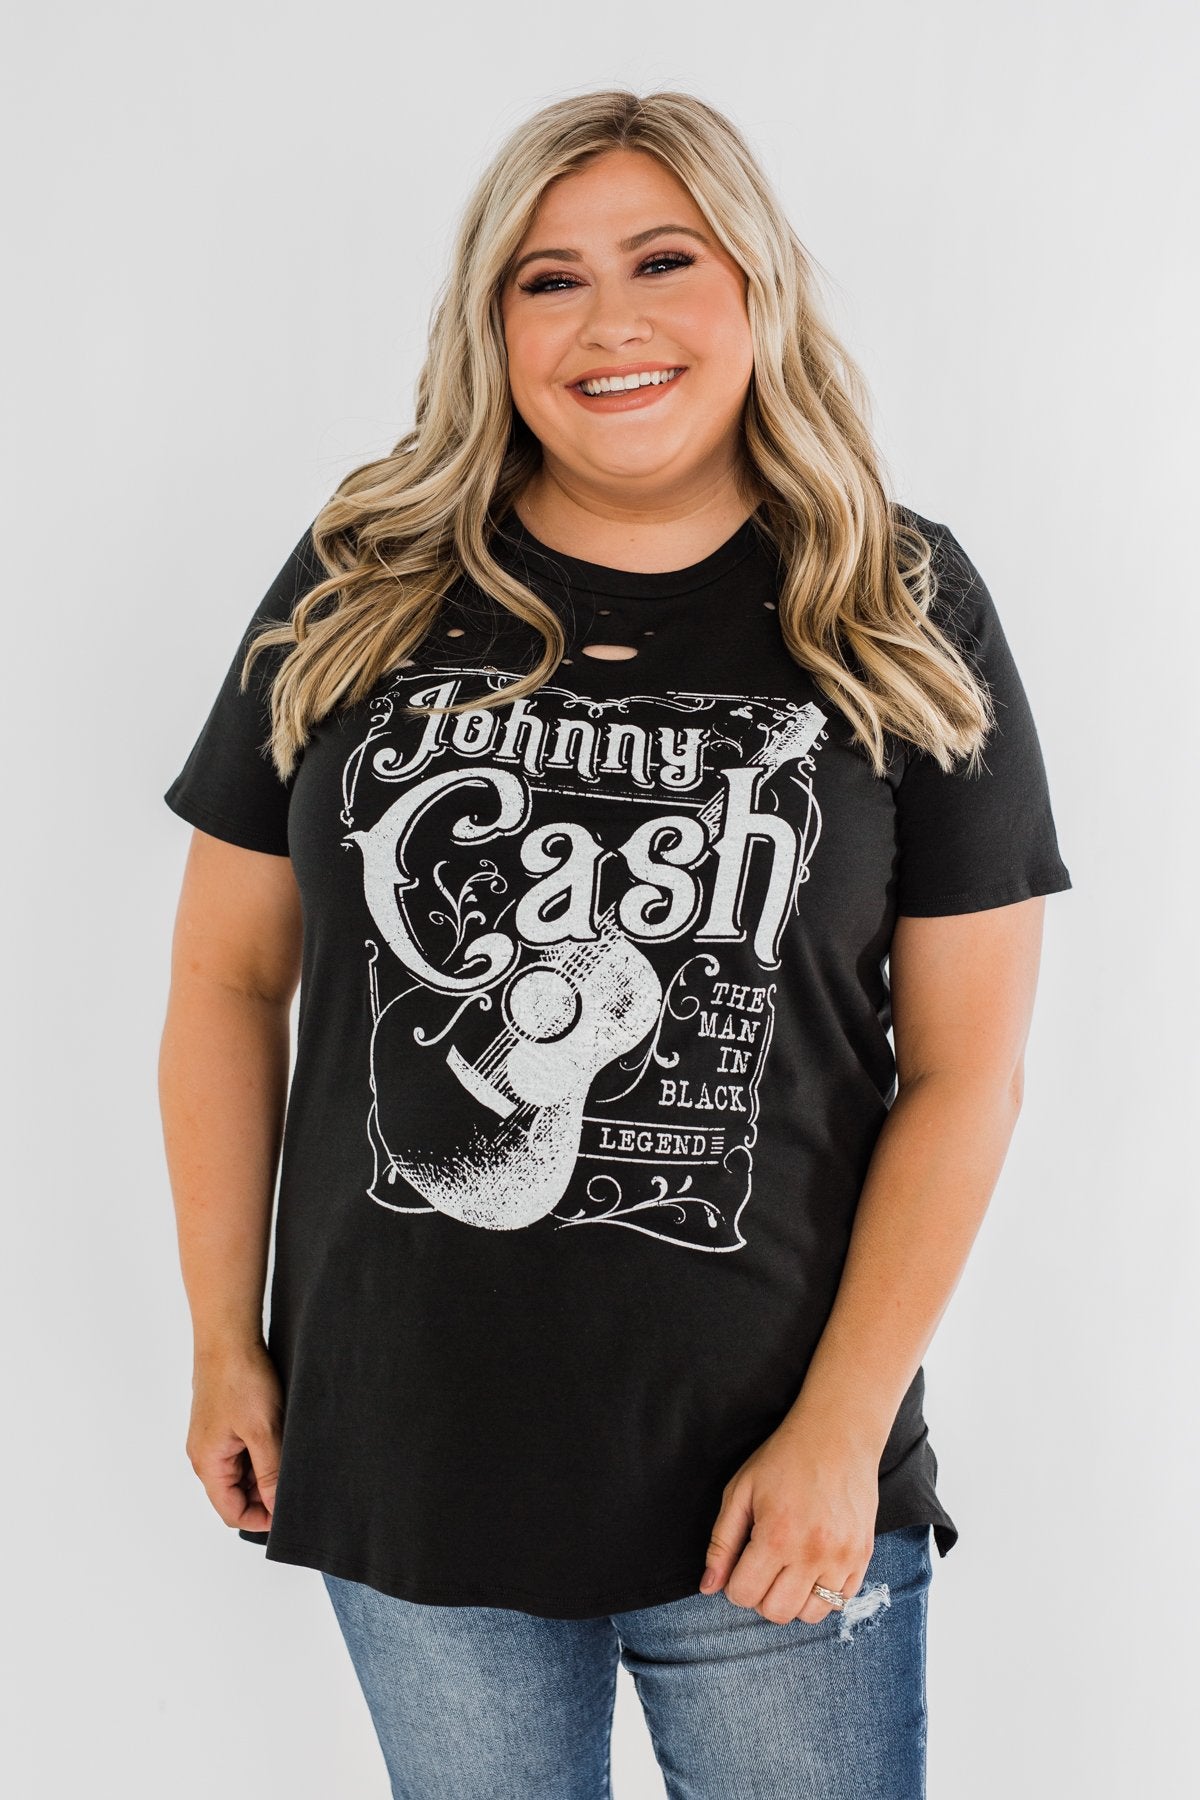 "Johnny Cash" Distressed Graphic Top- Black